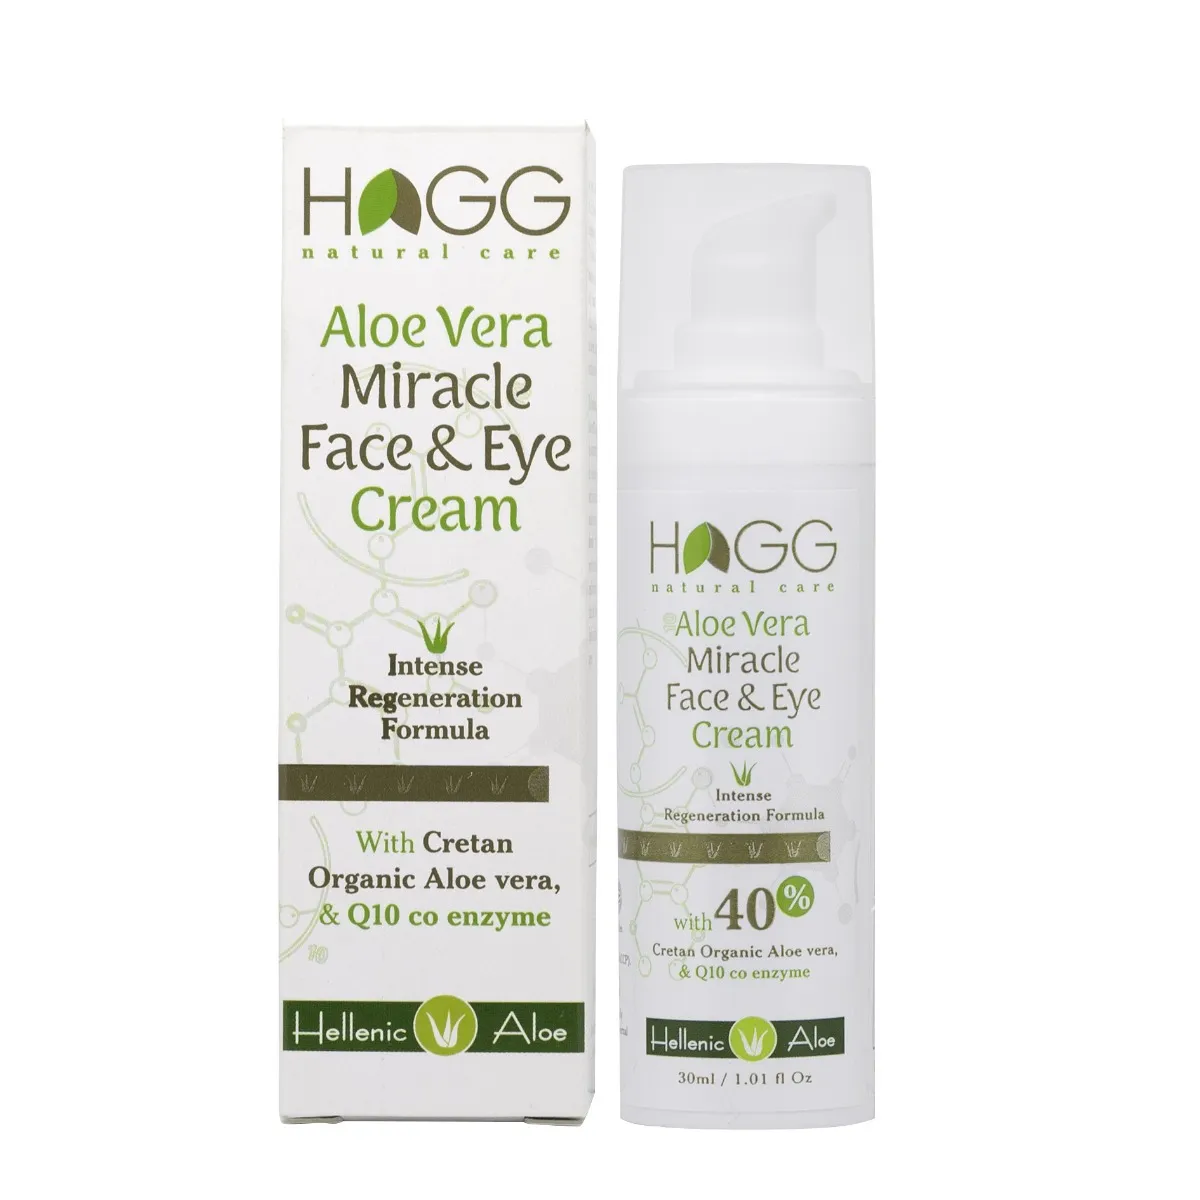 Crema Miracle fata & ochi Aloe Vera Cretana intarit cu enzima Q10, 30ml, Hagg